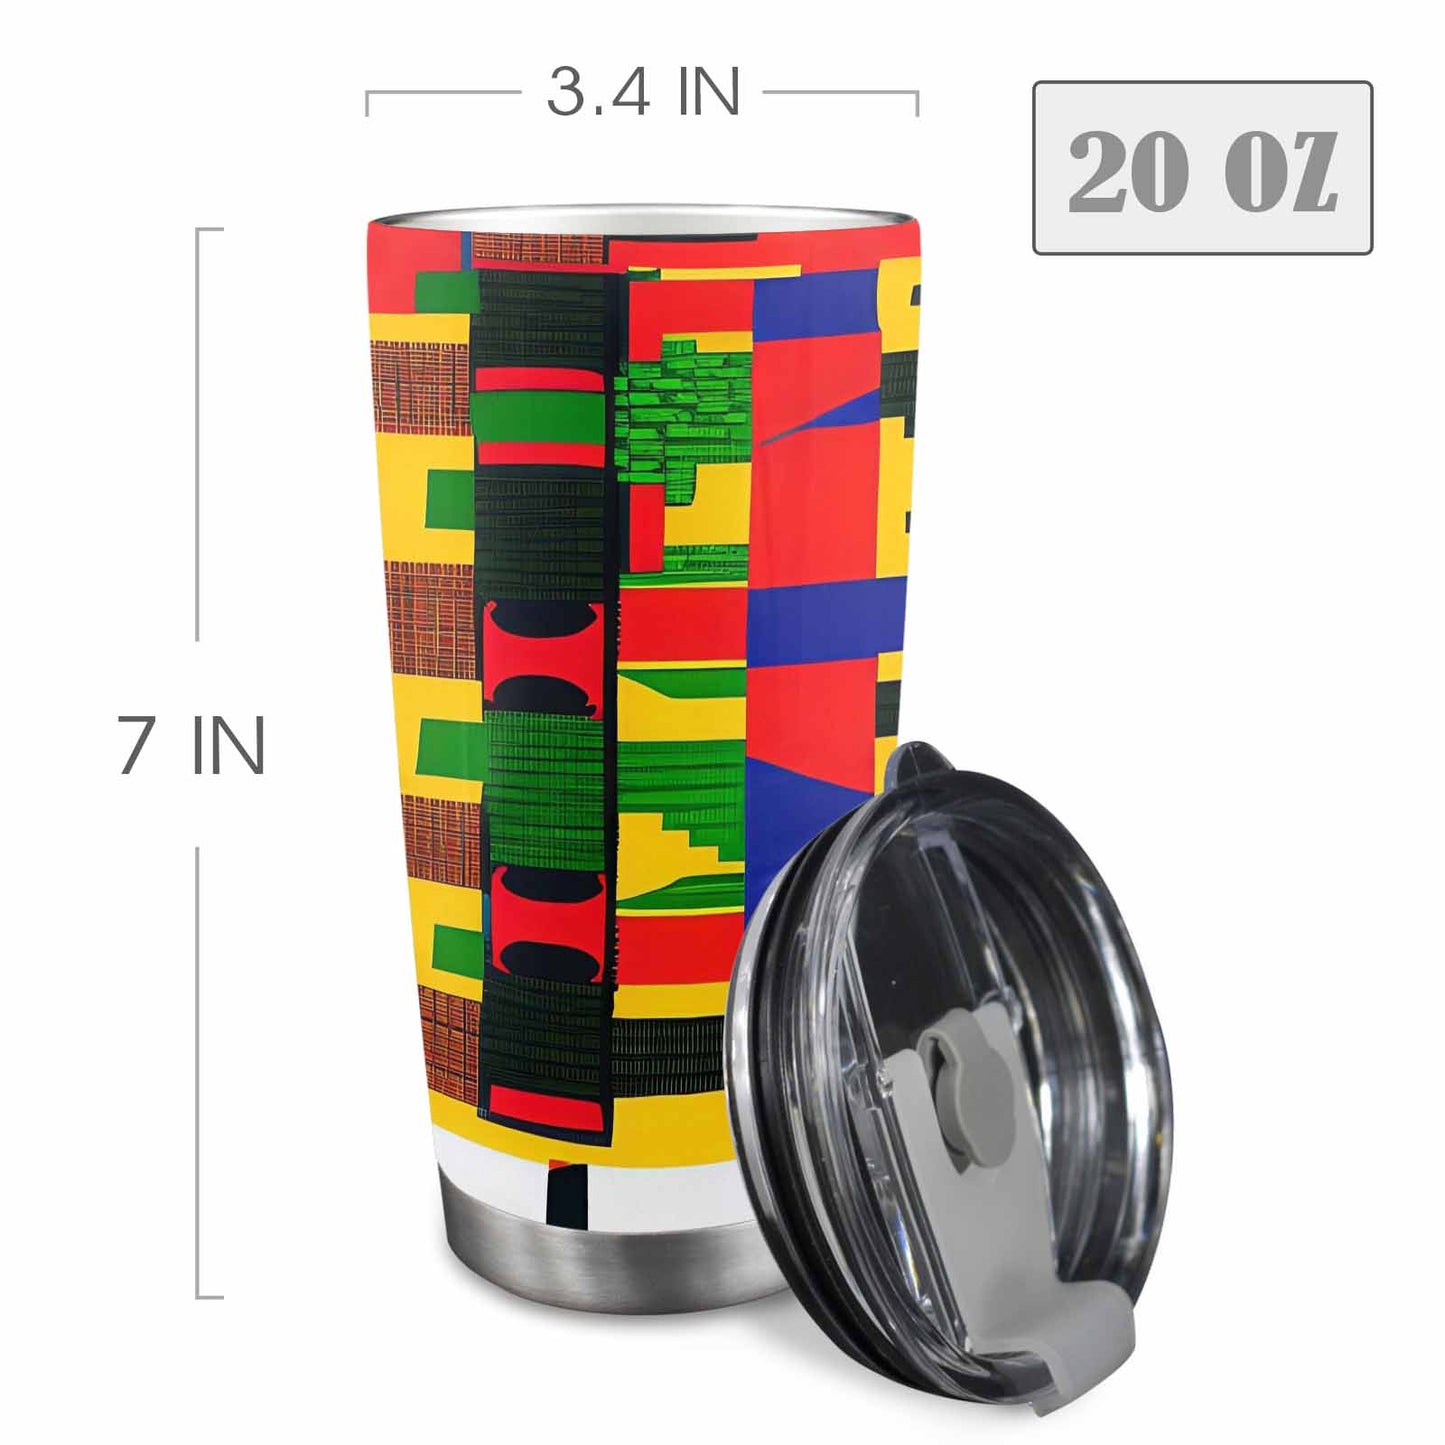 African Art, tumbler, mug, travel mug, design 12